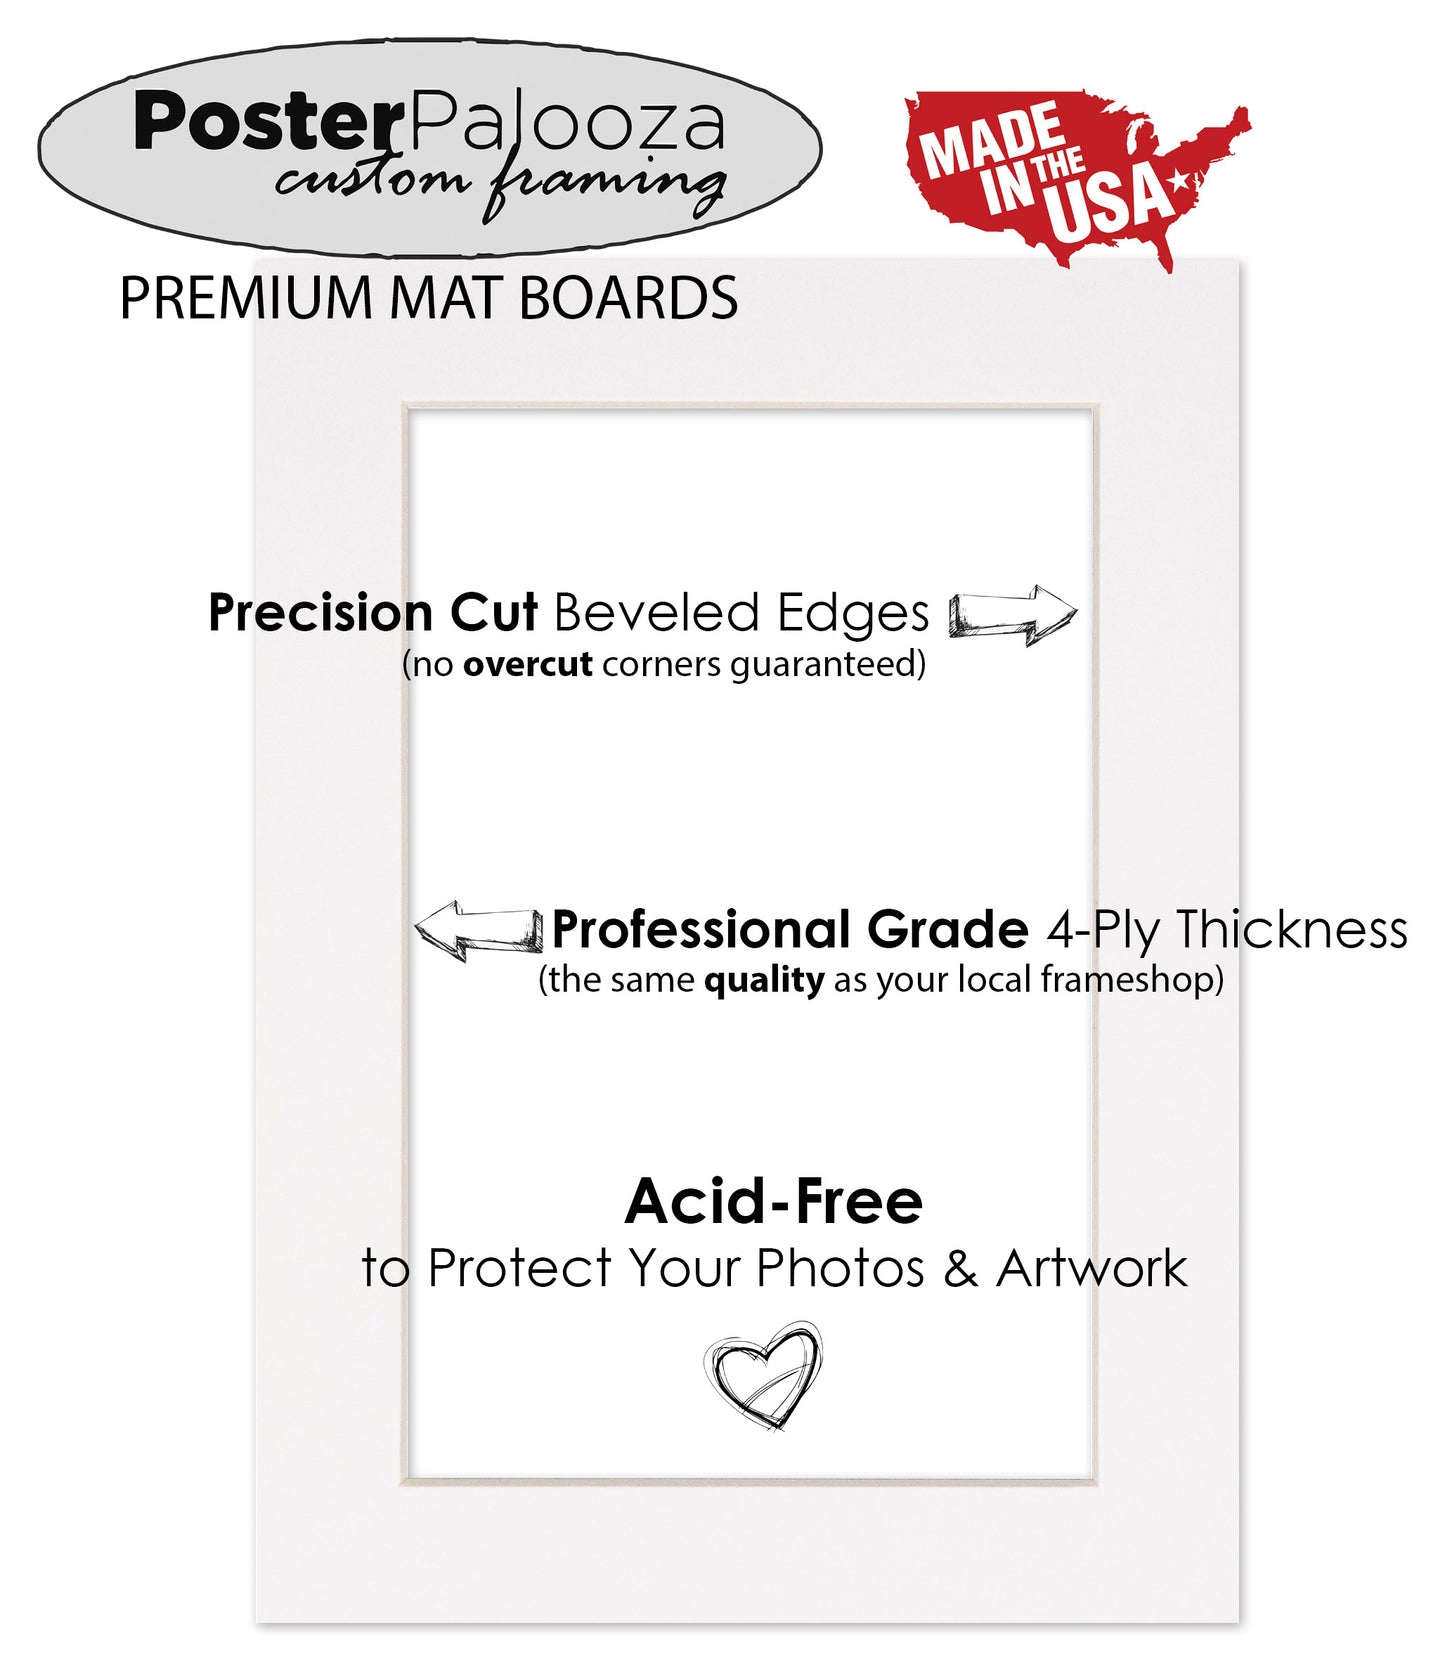 Pack of 10 Pistachio Green Precut Acid-Free Matboards